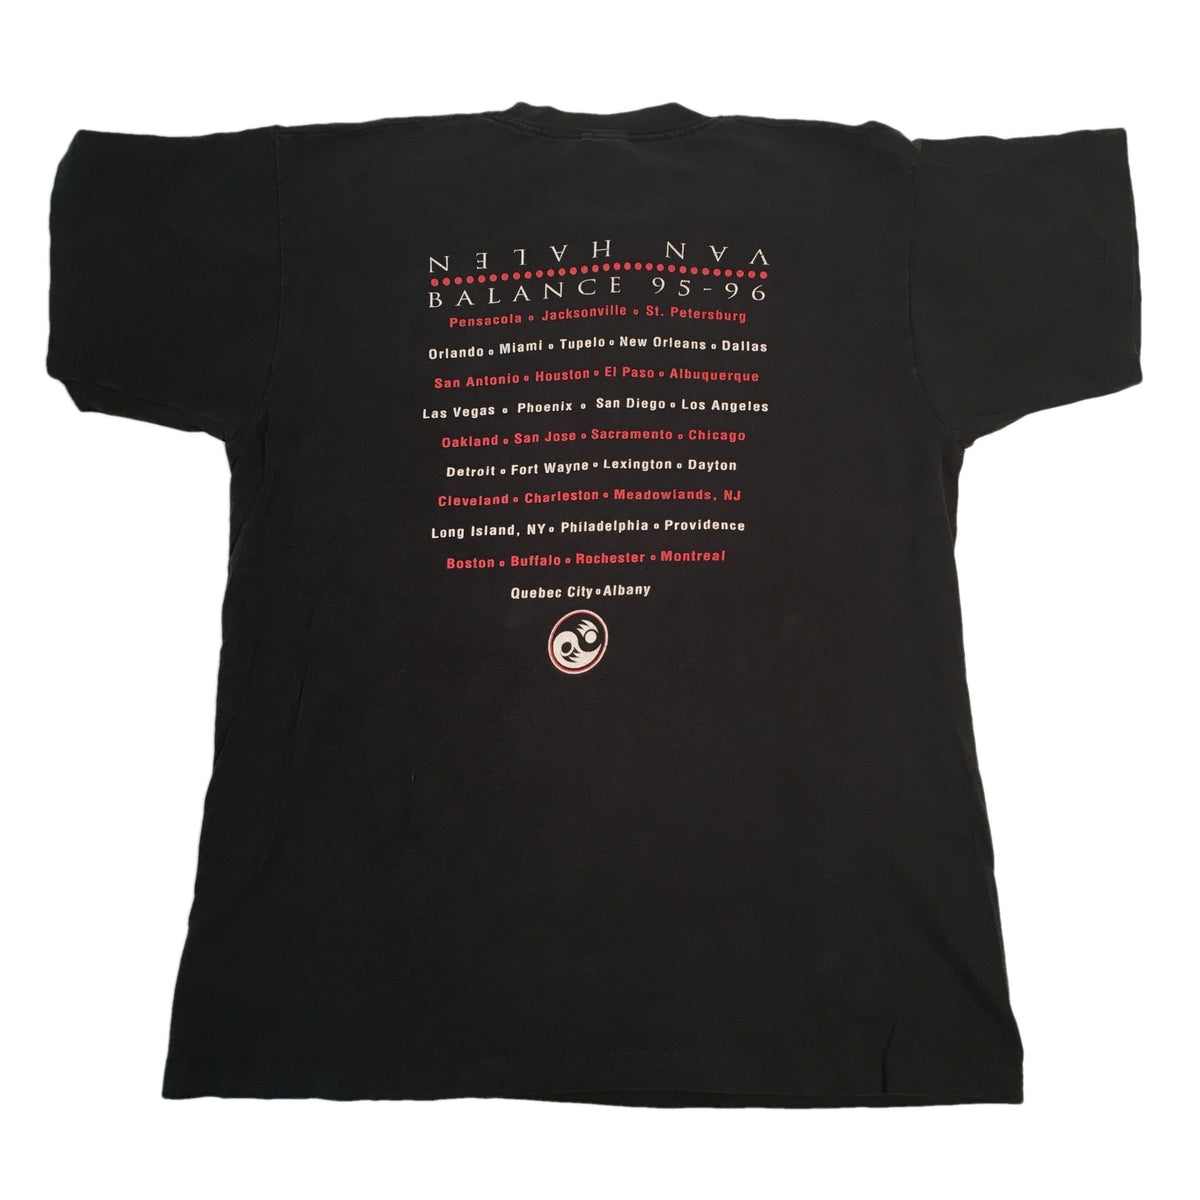 Vintage Van Halen &quot;Balance&quot; T-Shirt - jointcustodydc